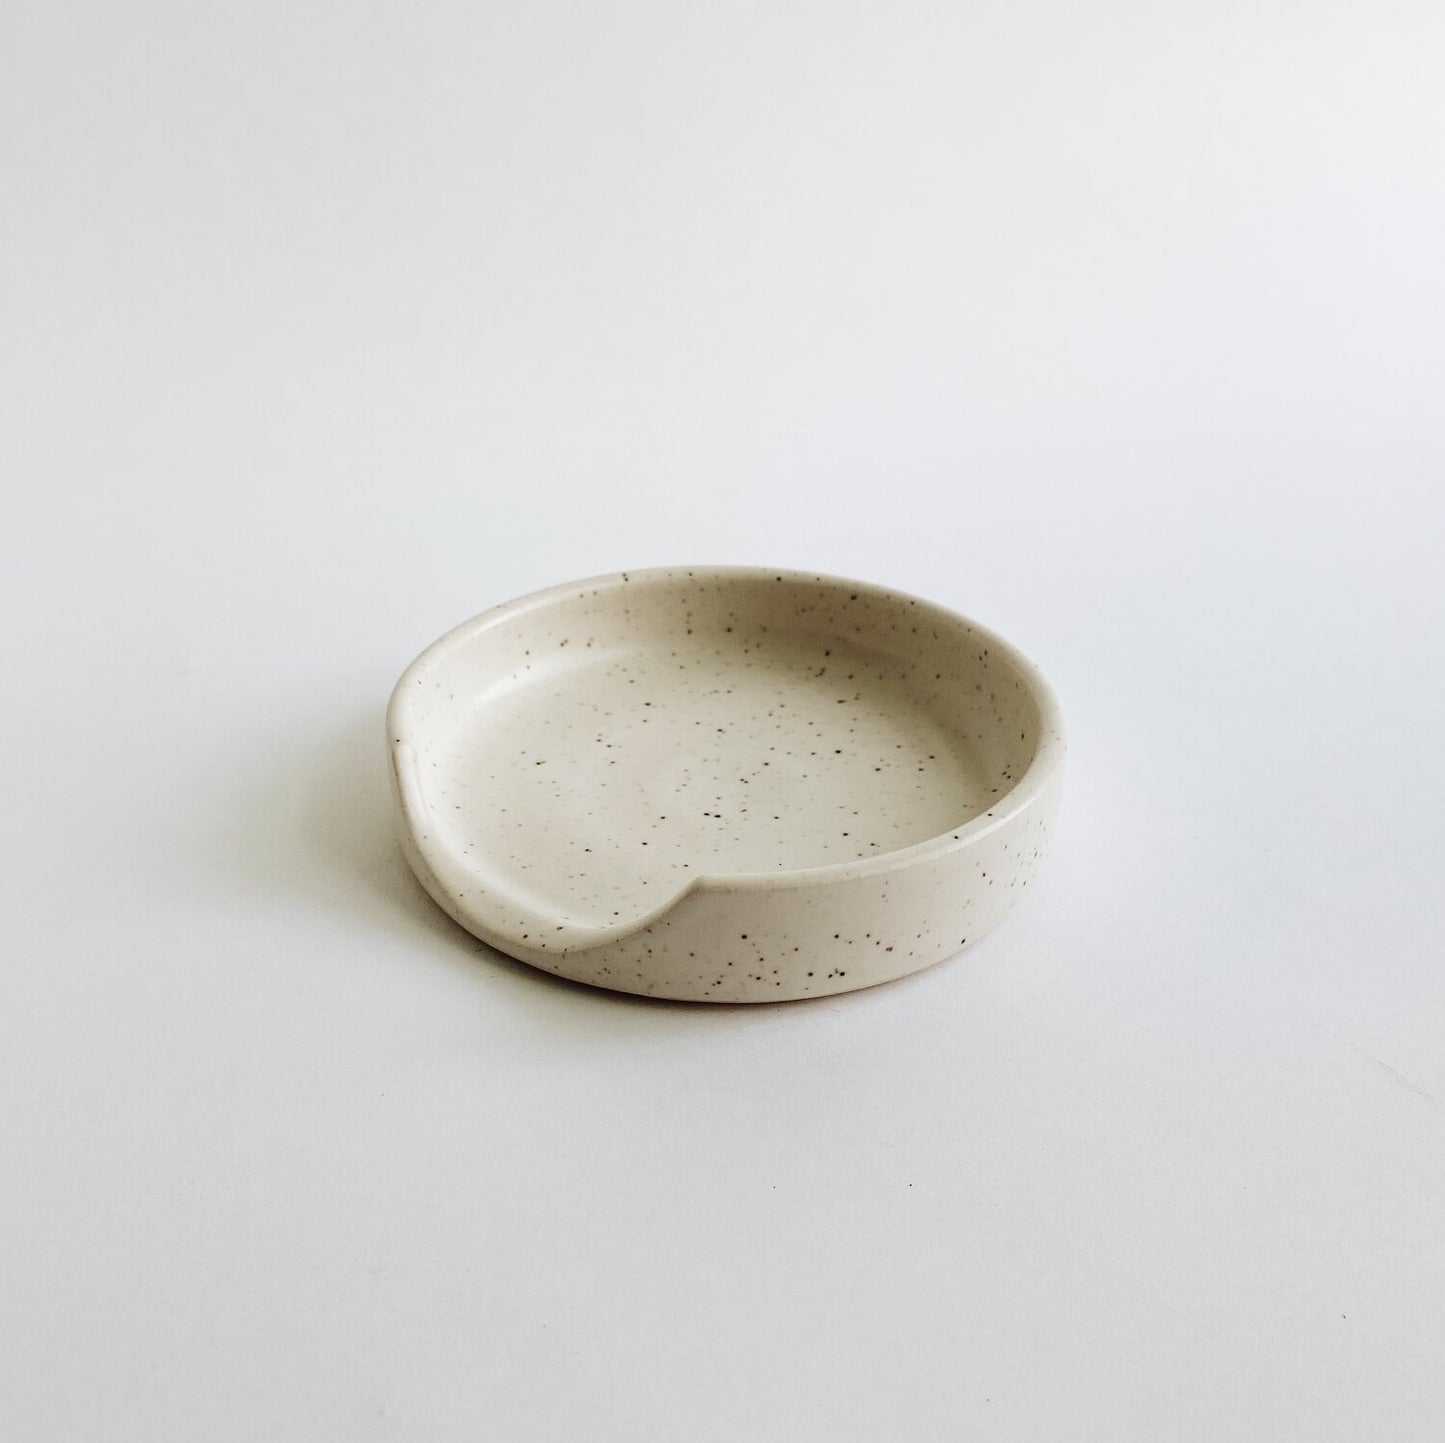 4.75 inch diameter ceramic stoneware spoon rest in white speckled glaze